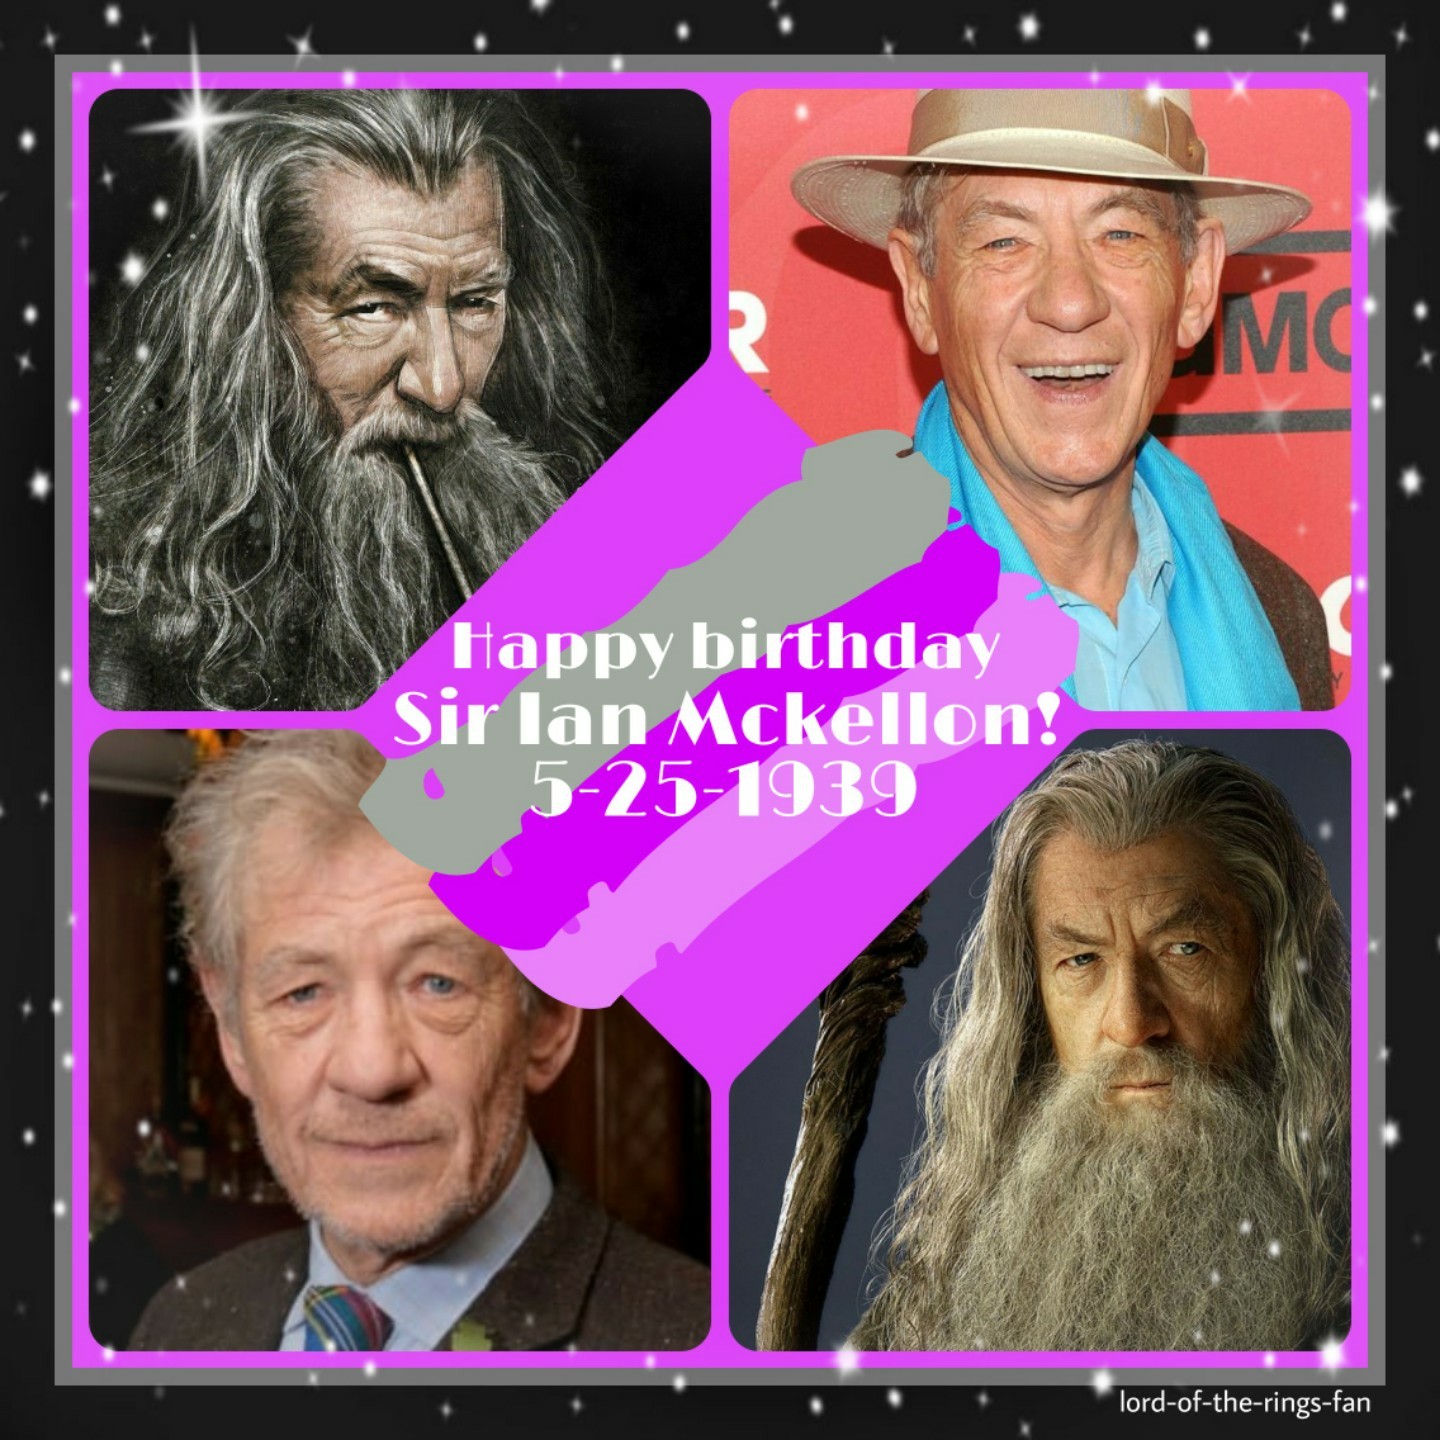 He is turning 80!😱😬😰💗
#lotr #hobbit #Tolkien #Ian Mckellon